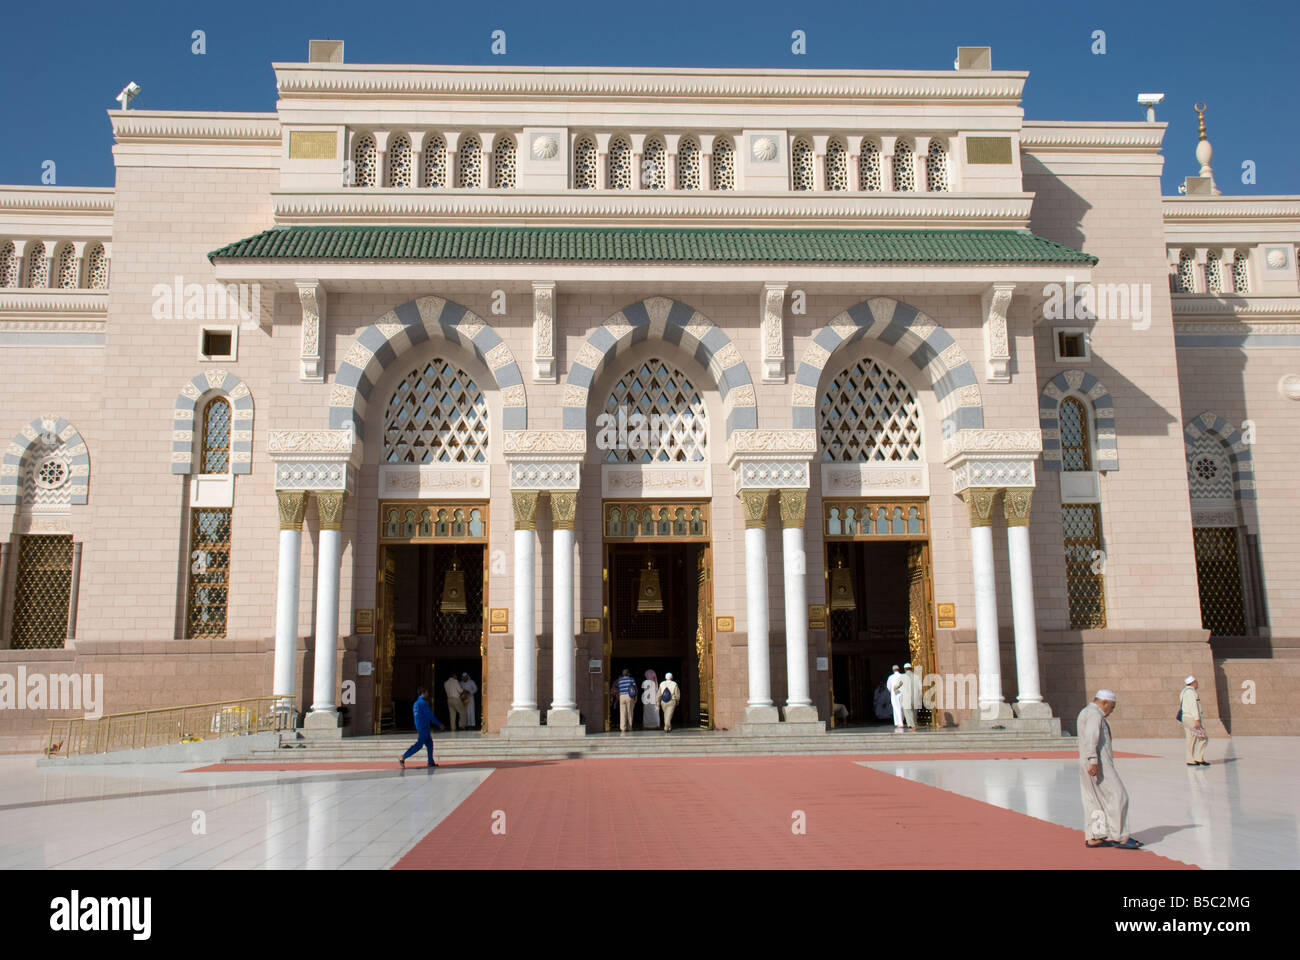 The Quba gate of Masjid Al Nabawi in Madinah Saudi Arabia Stock Photo